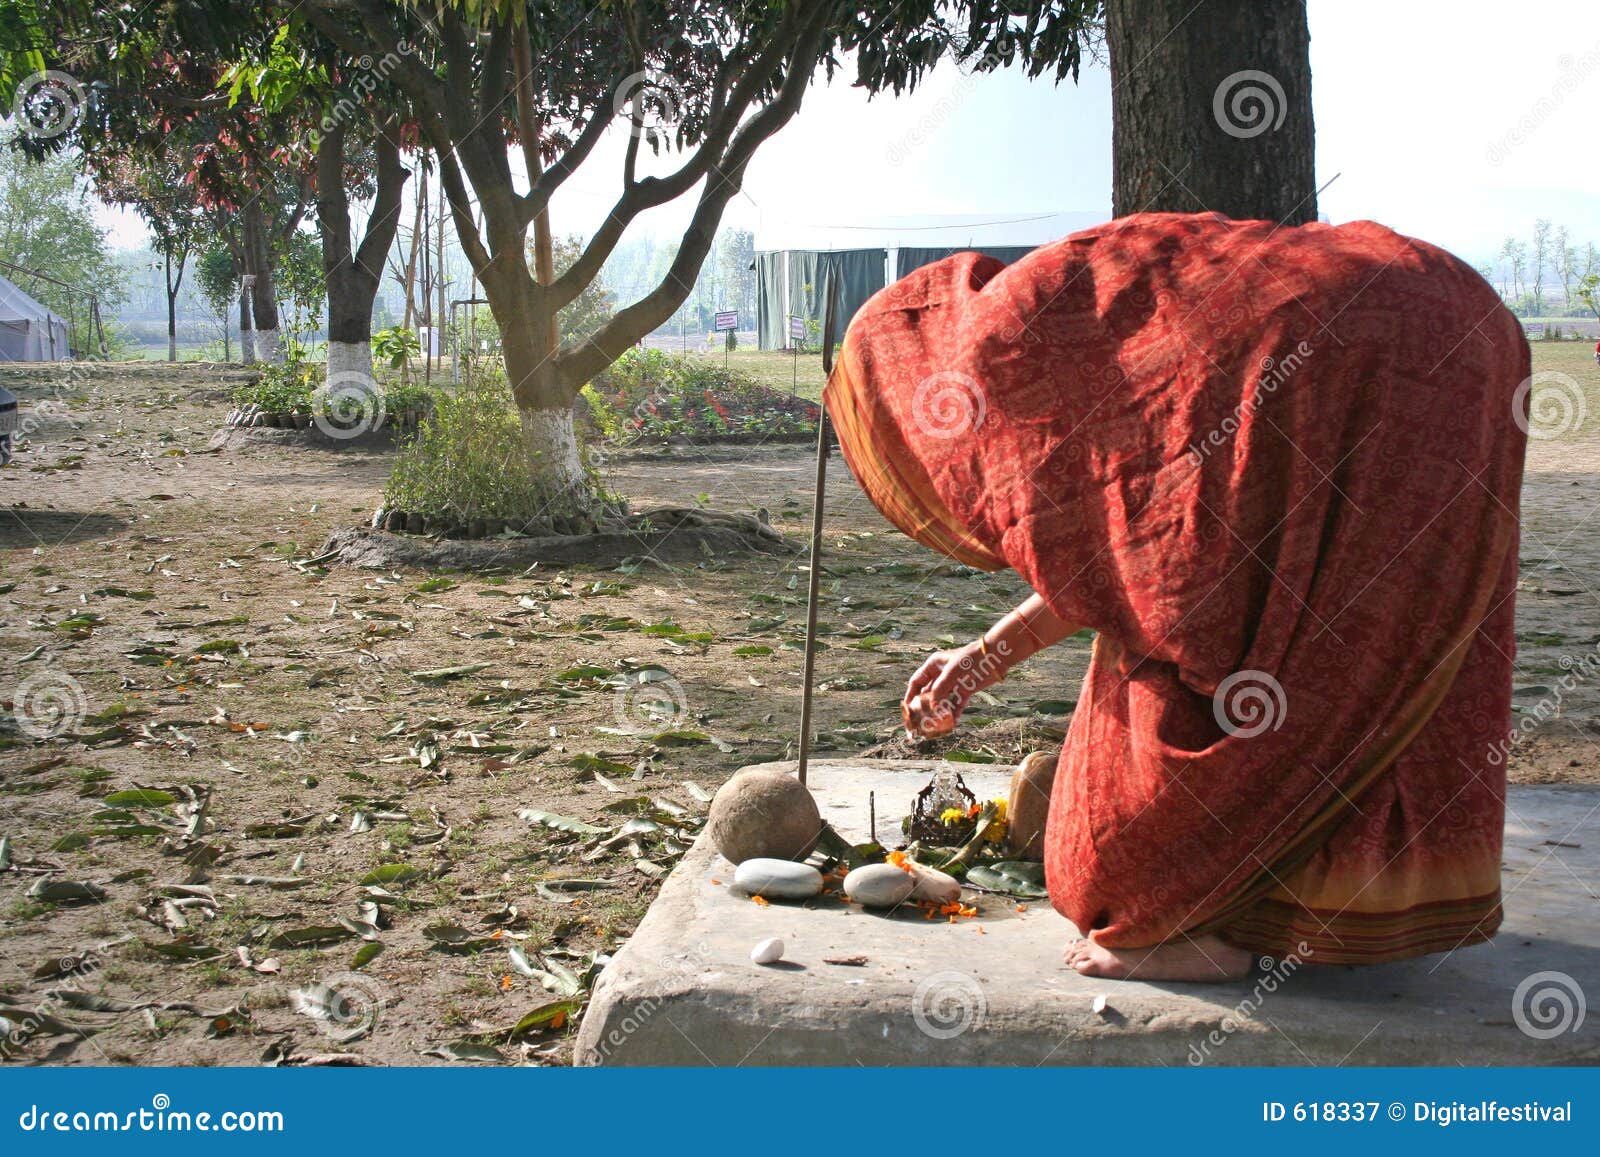 woman performs traditional morning worship ritual in courtyard